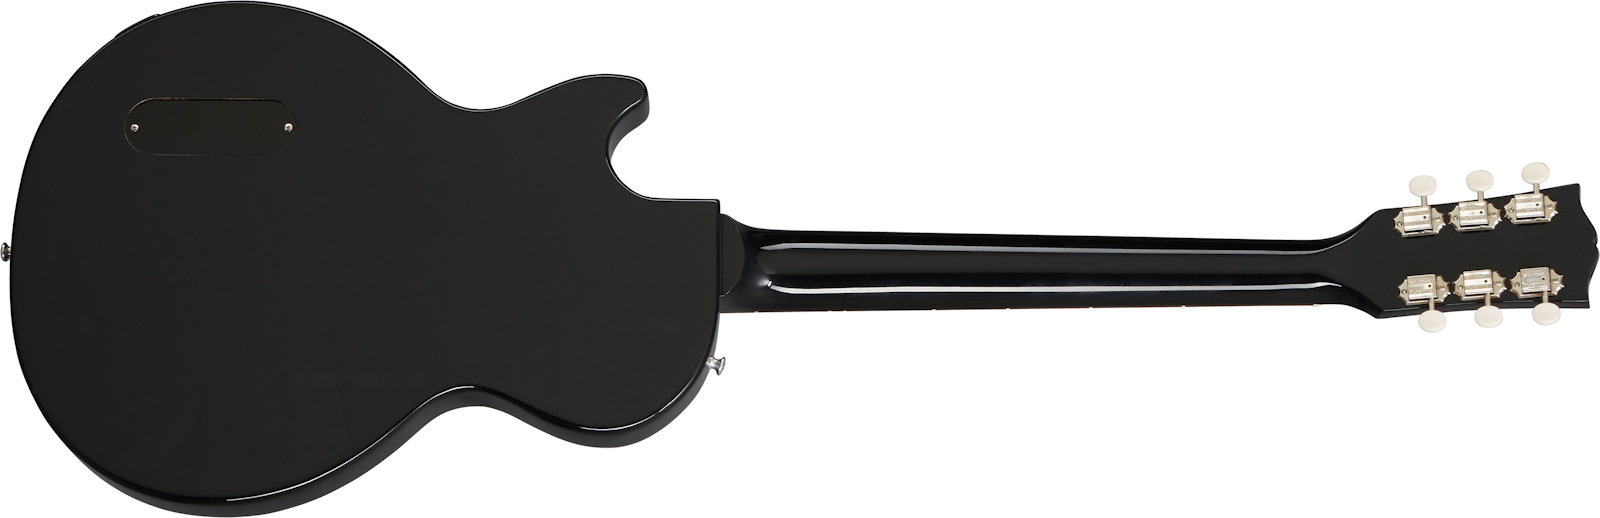 Gibson Les Paul Junior Original 2020 P90 Ht Rw - Ebony - Guitarra eléctrica de corte único. - Variation 1